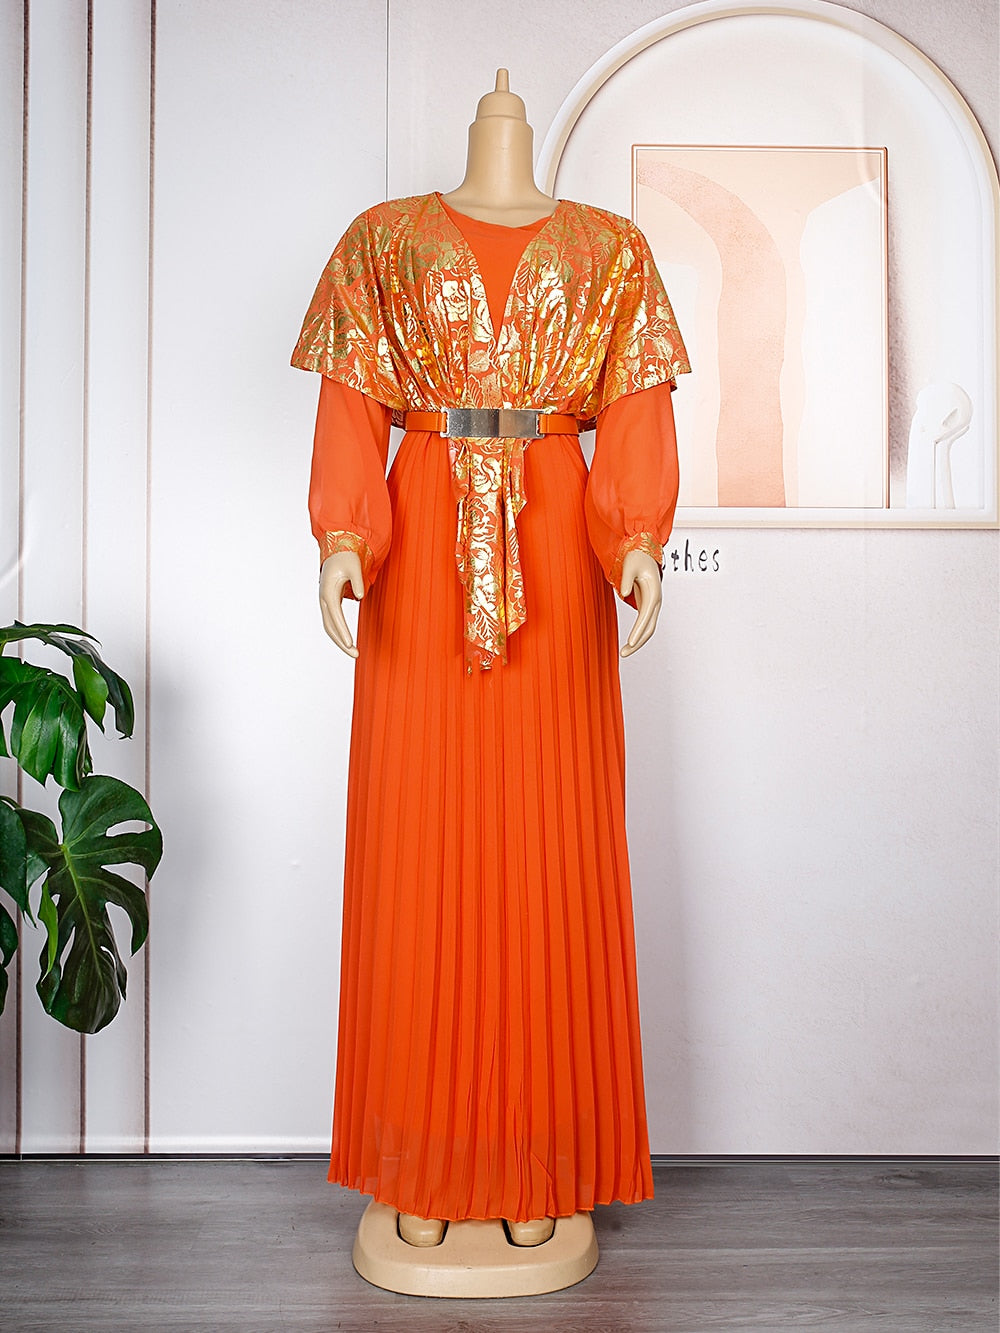 Chiffon Dresses Women Plus Size Evening Party Long Dress Dashiki Print Muslim Abaya Kaftan